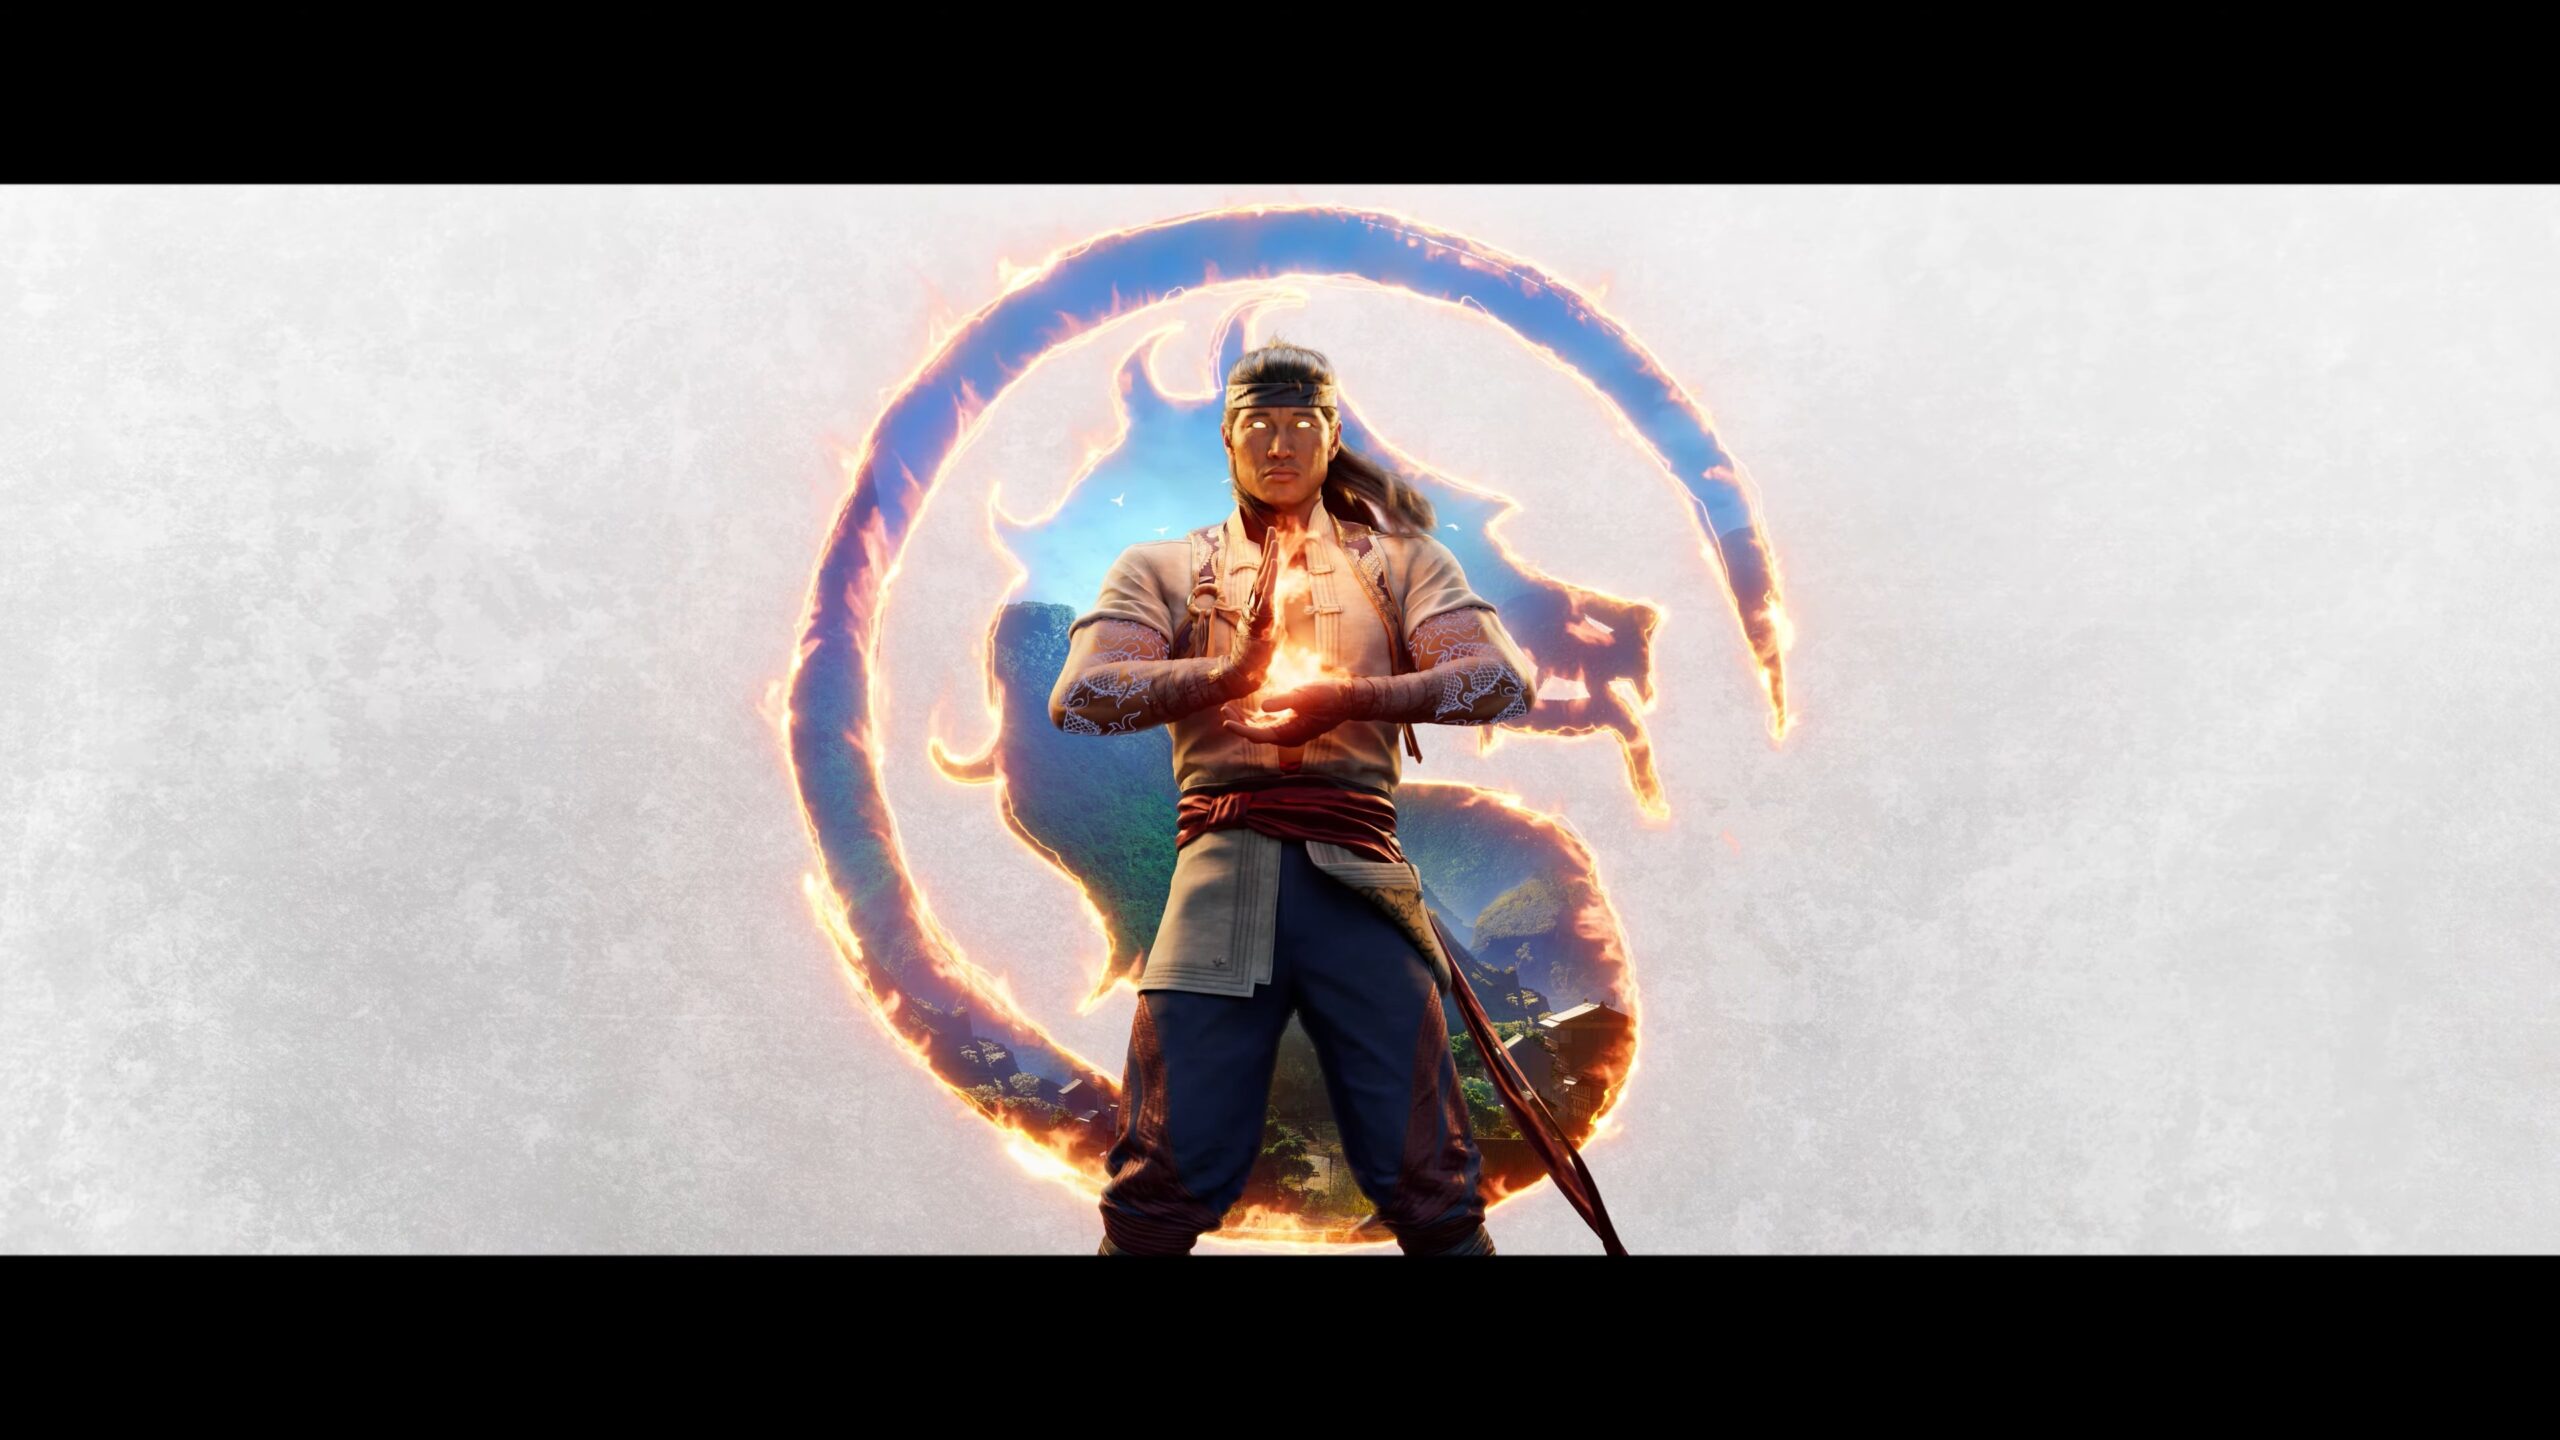 Mortal Kombat 1 Launch Trailer Reveals First Look at Shang Tsung -  PlayStation LifeStyle